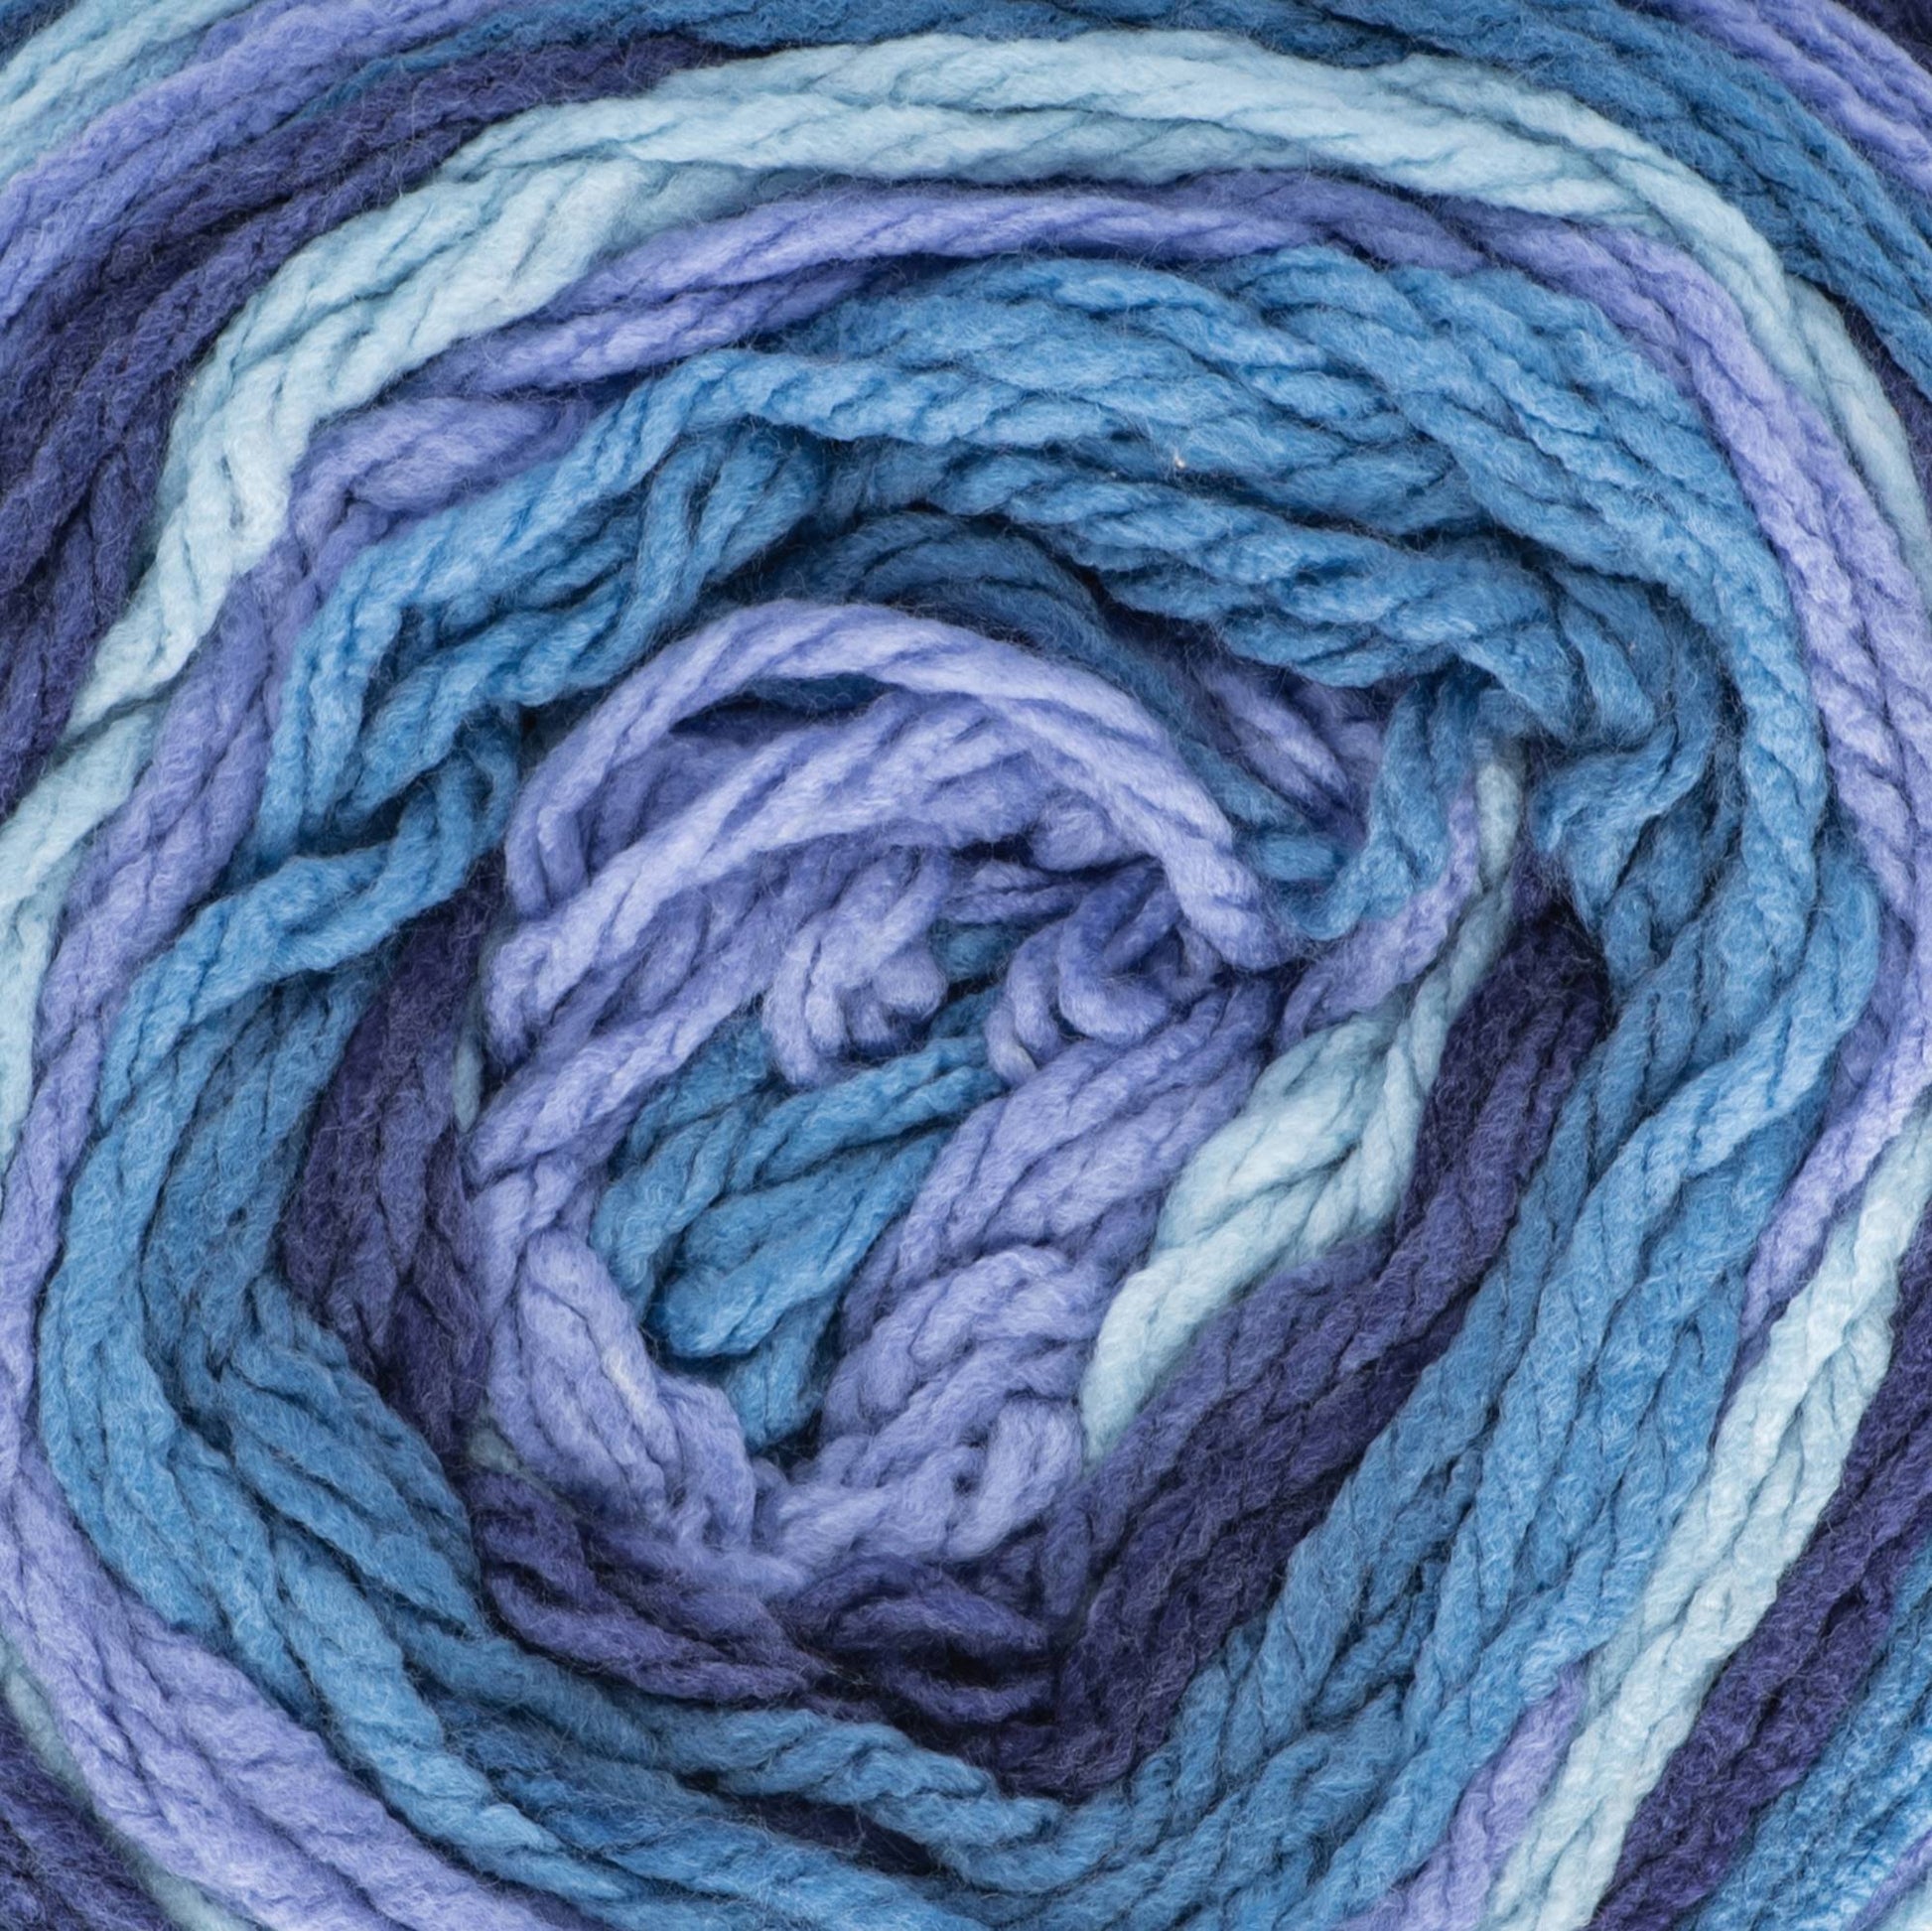 Caron Anniversary Cakes Yarn (1000g/35.3oz) - Clearance Shades Blue Hues